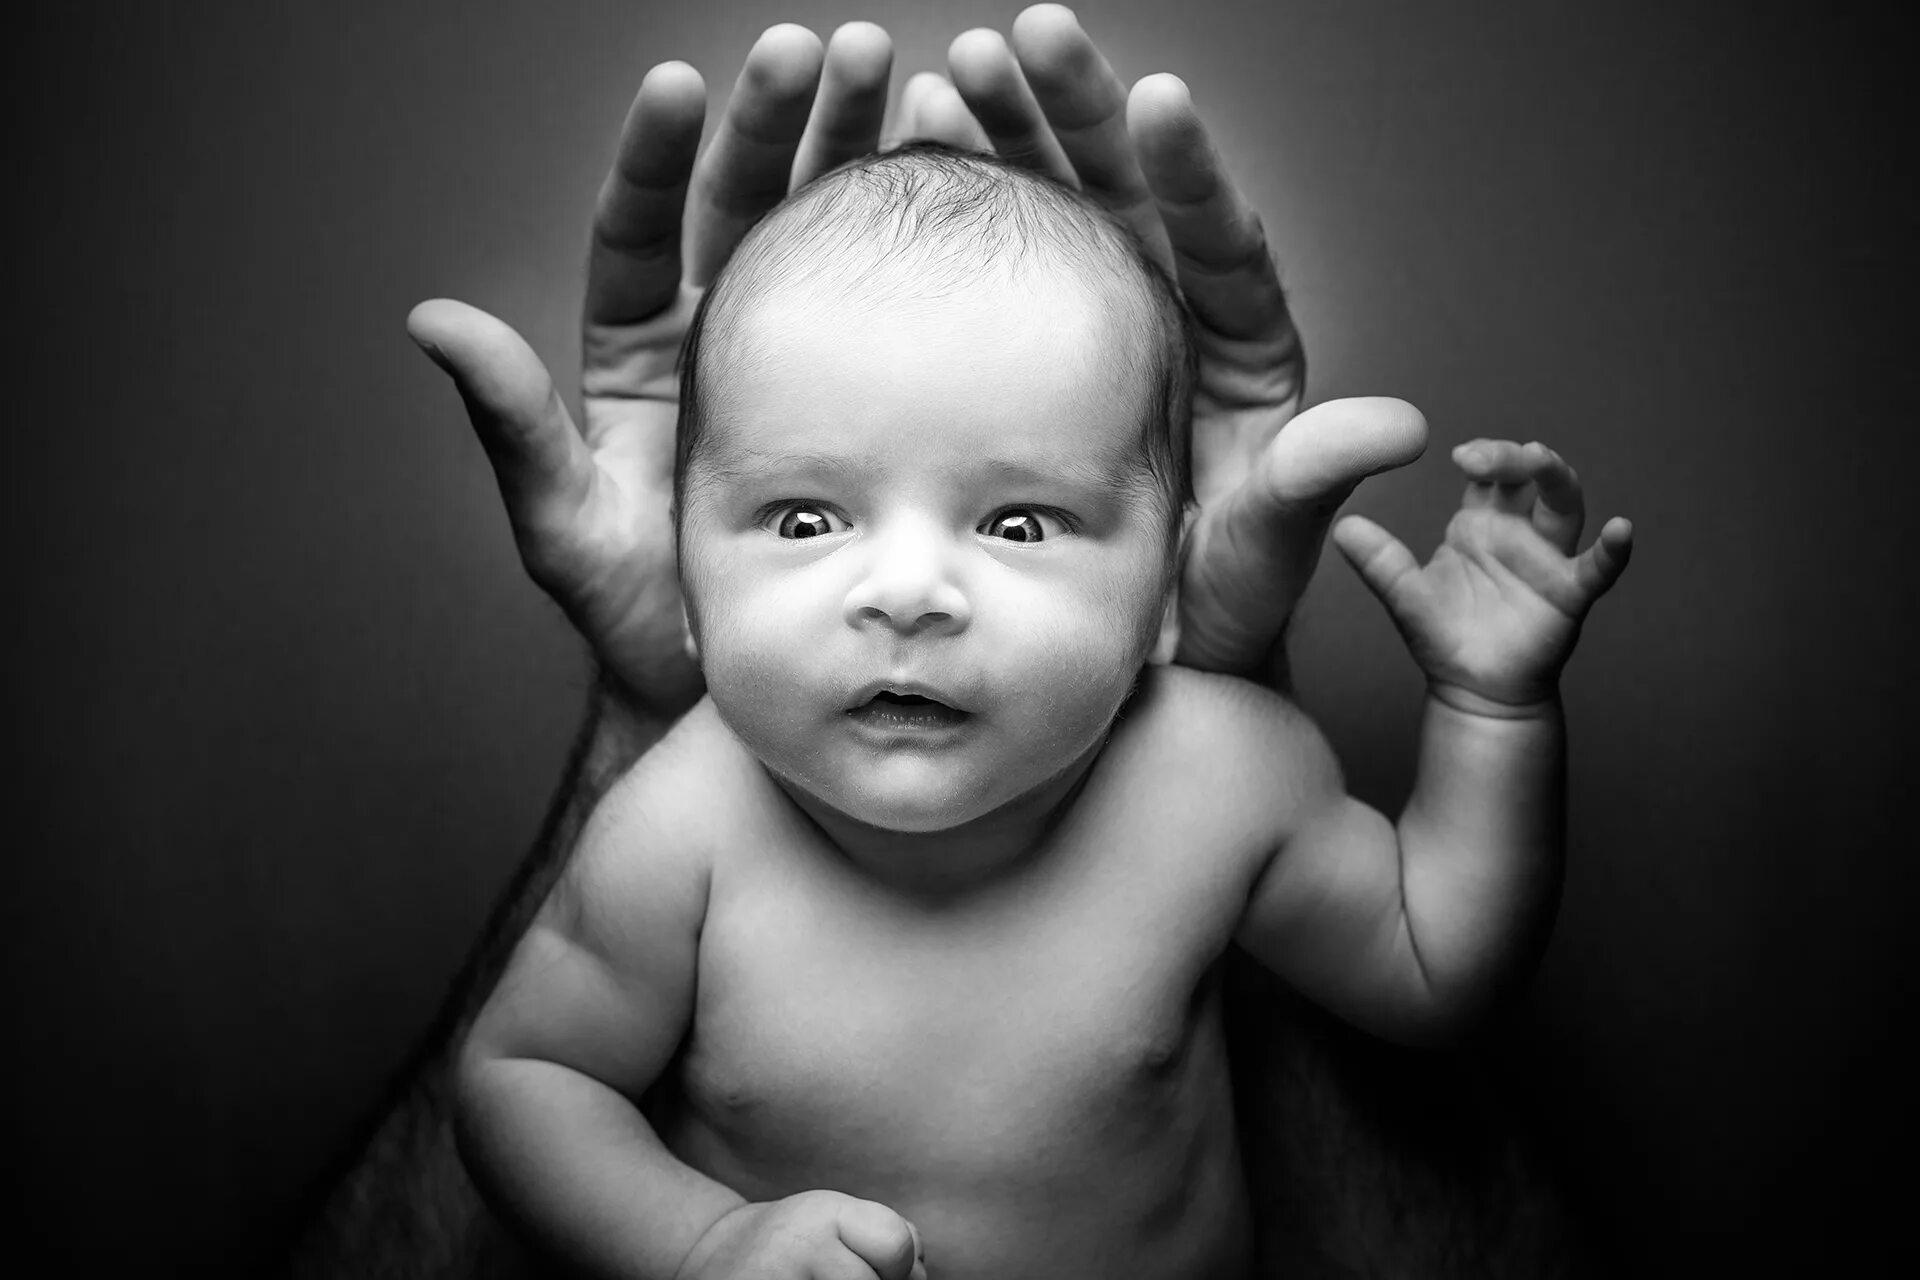 Same baby. Картинки для малышей. Newborn Baby. Картинки про детей смыслю. Newborn Baby hand.